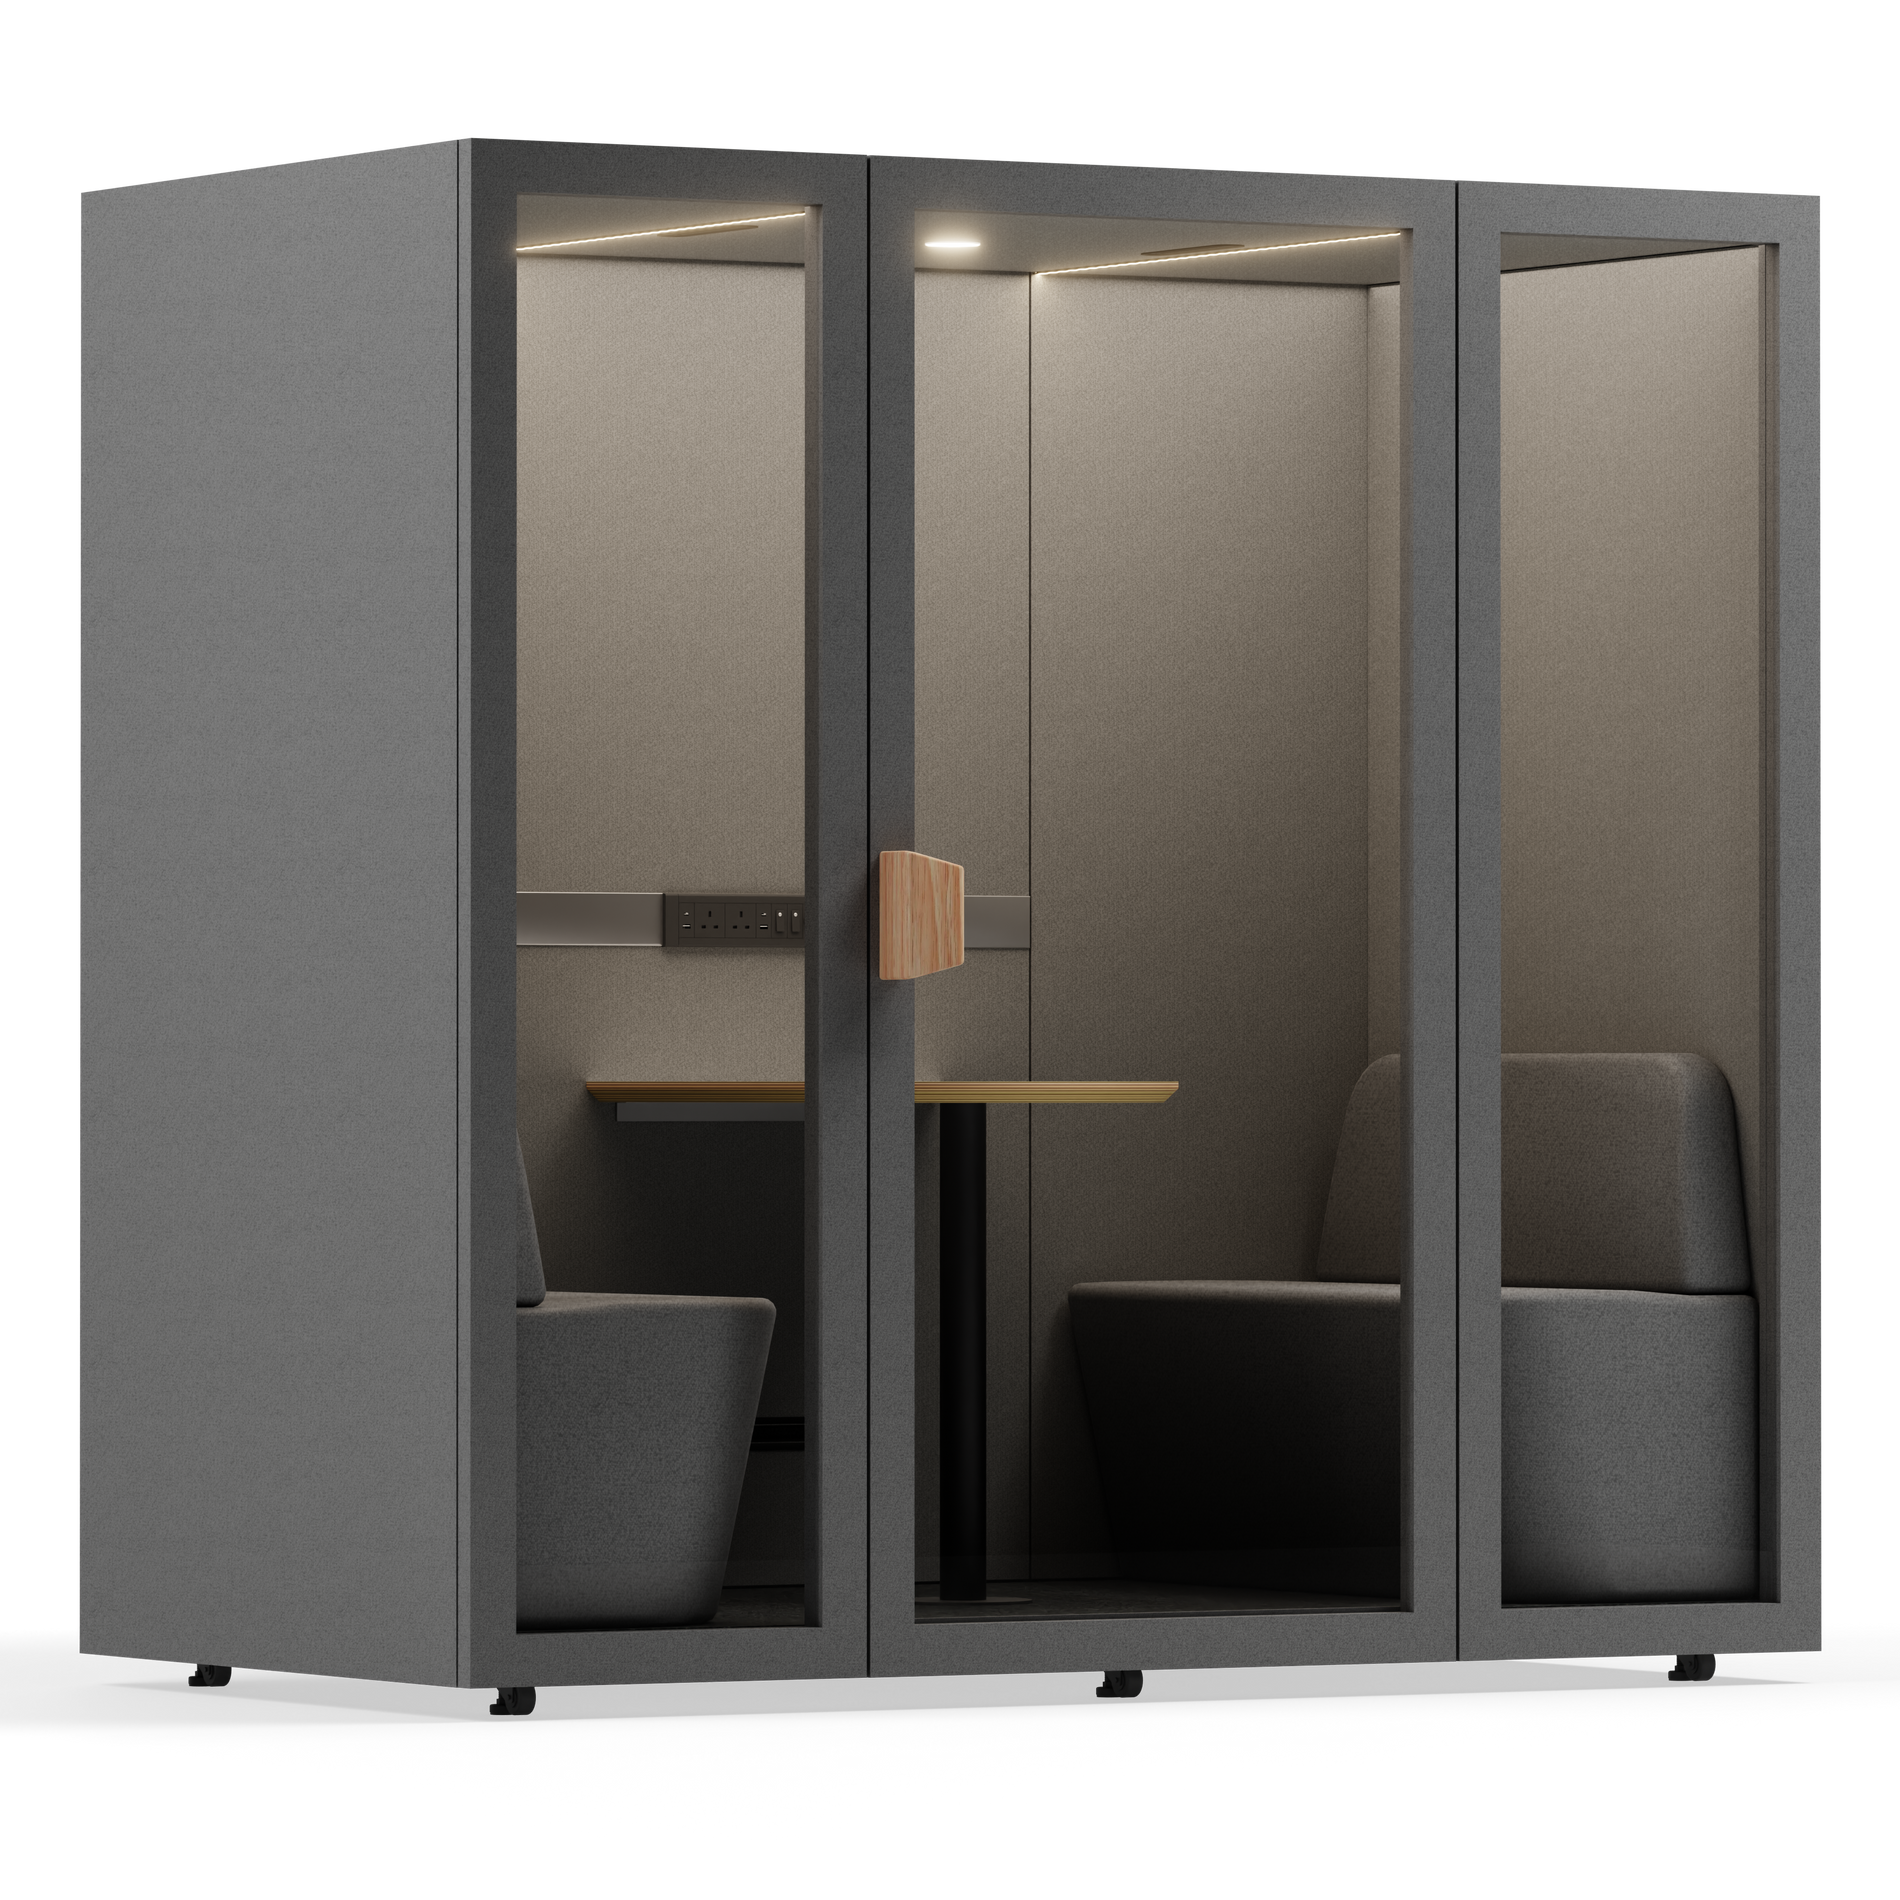 Telefonboks på kontoret - 2 - 4 personerFolio Dark Grey / Furniture As Per Images